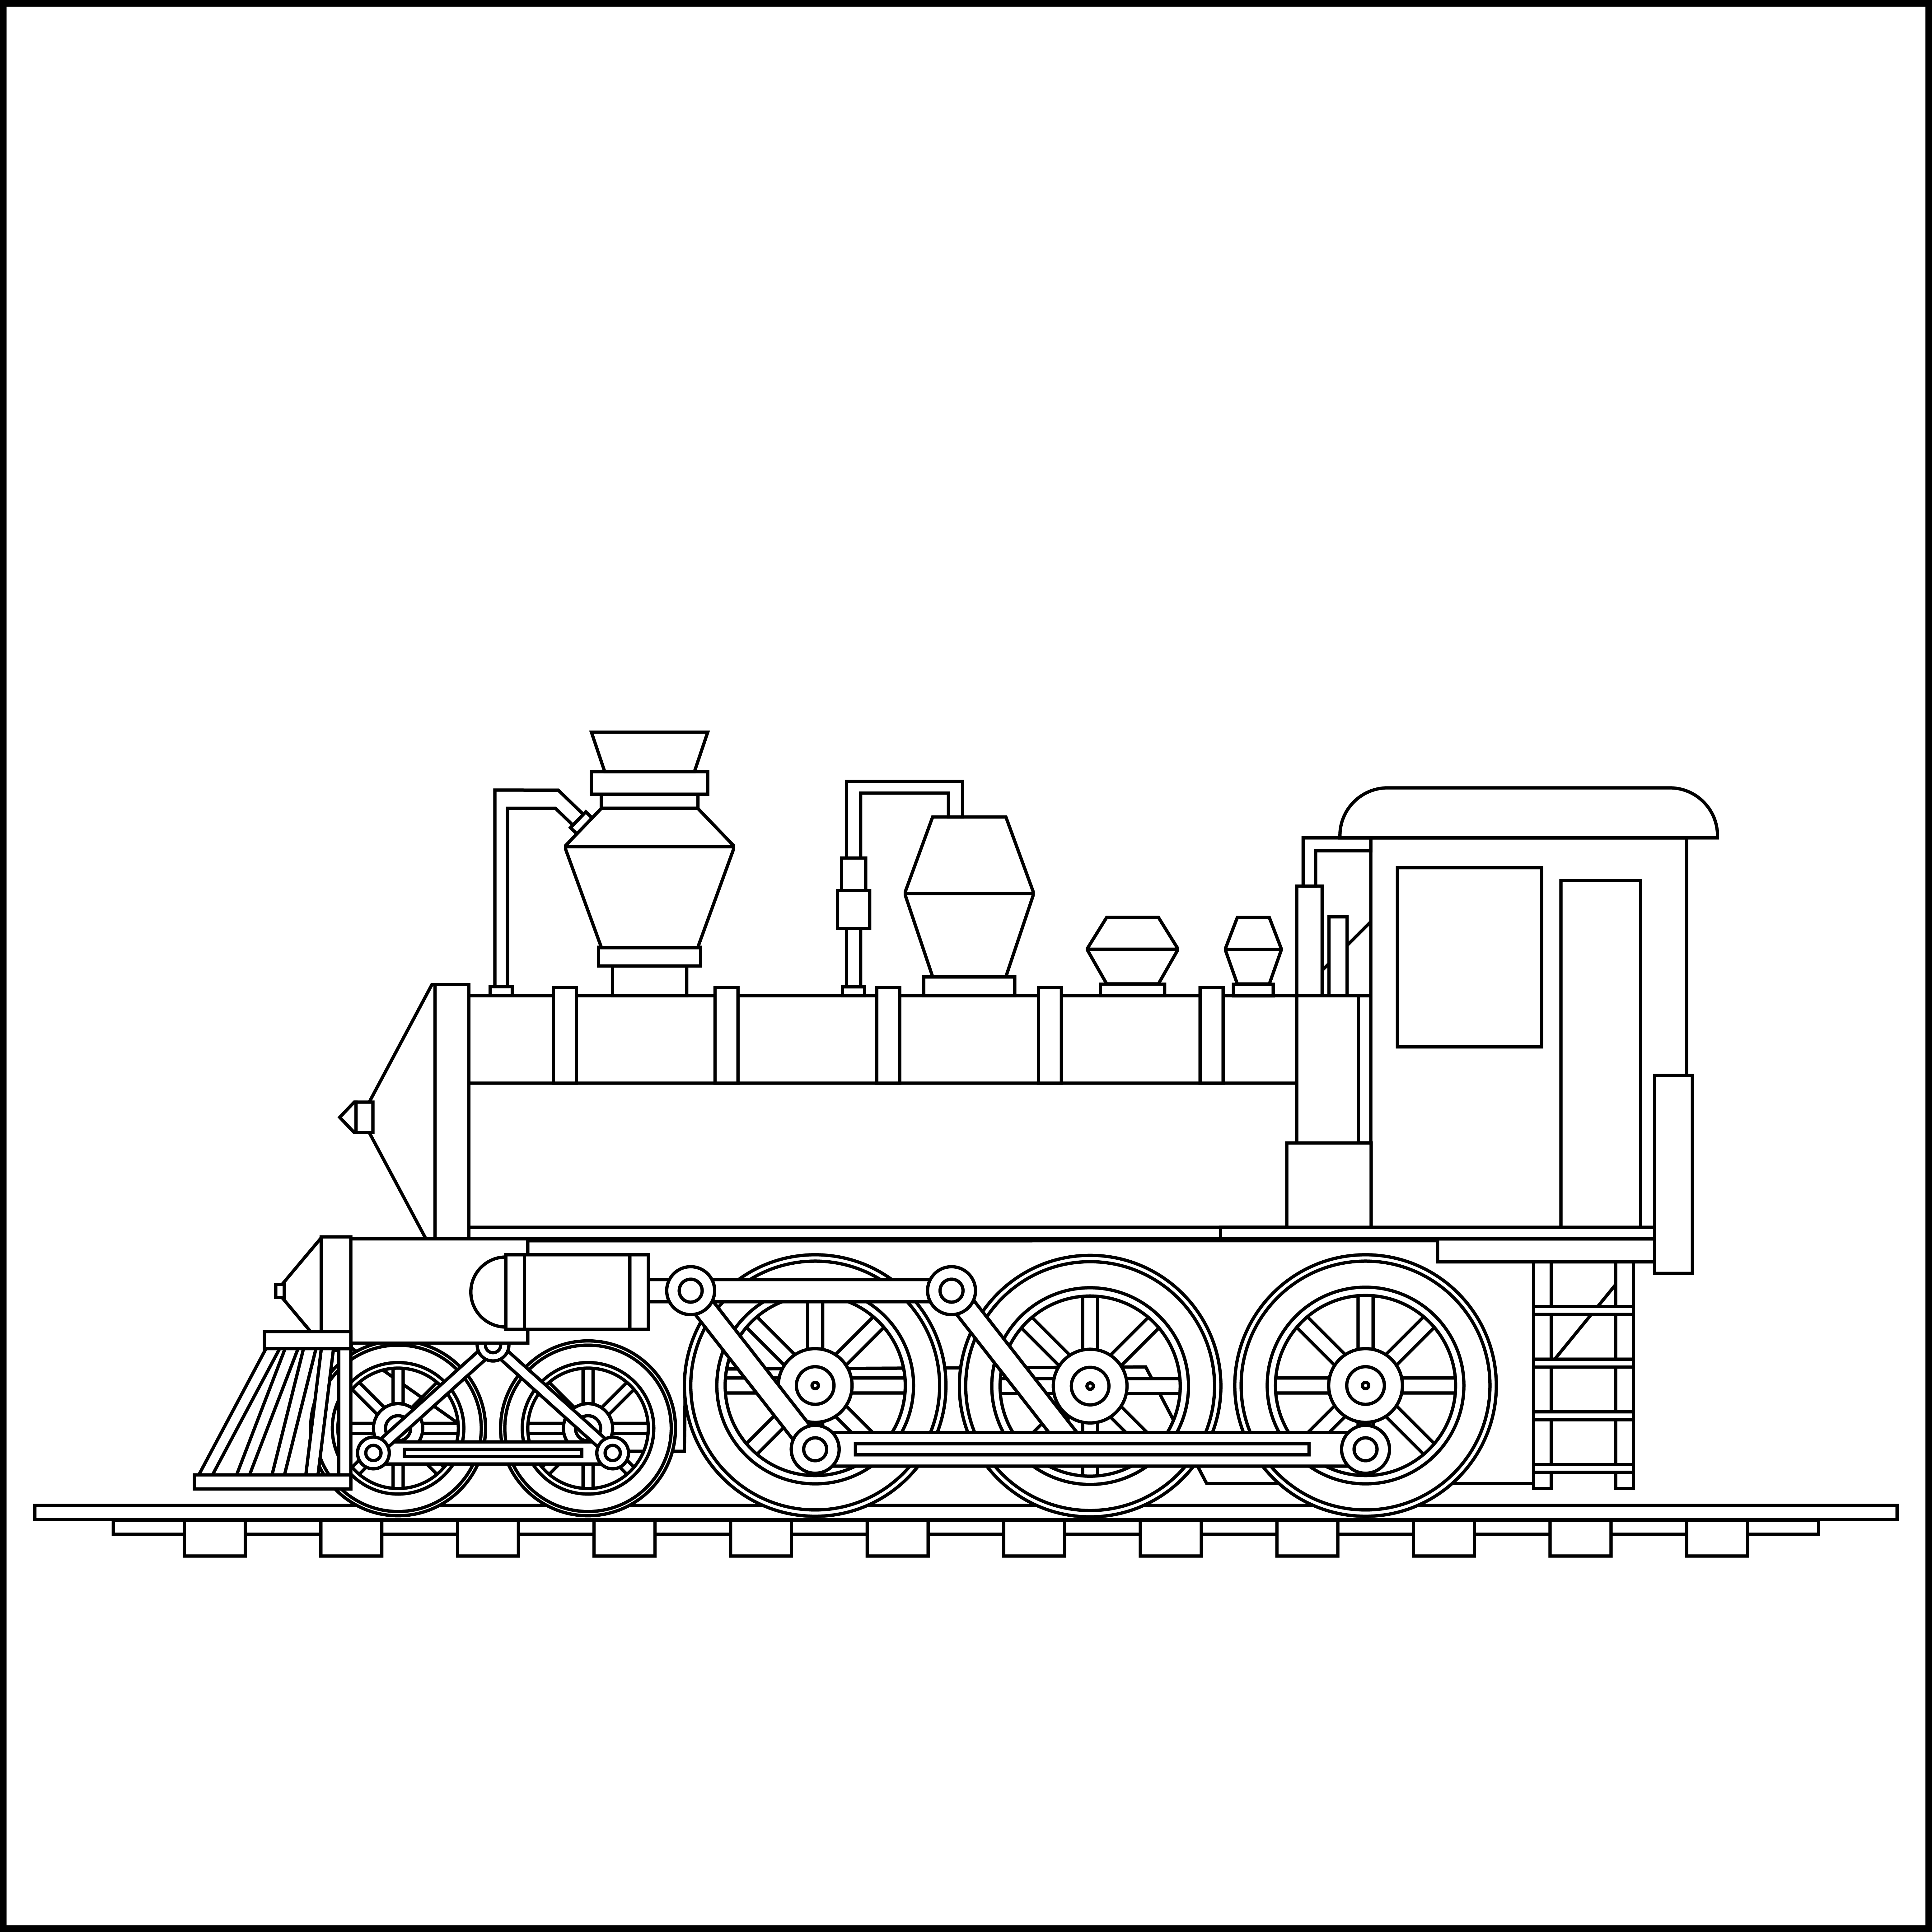 Раскраска старый поезд на путях формата А4 в высоком качестве